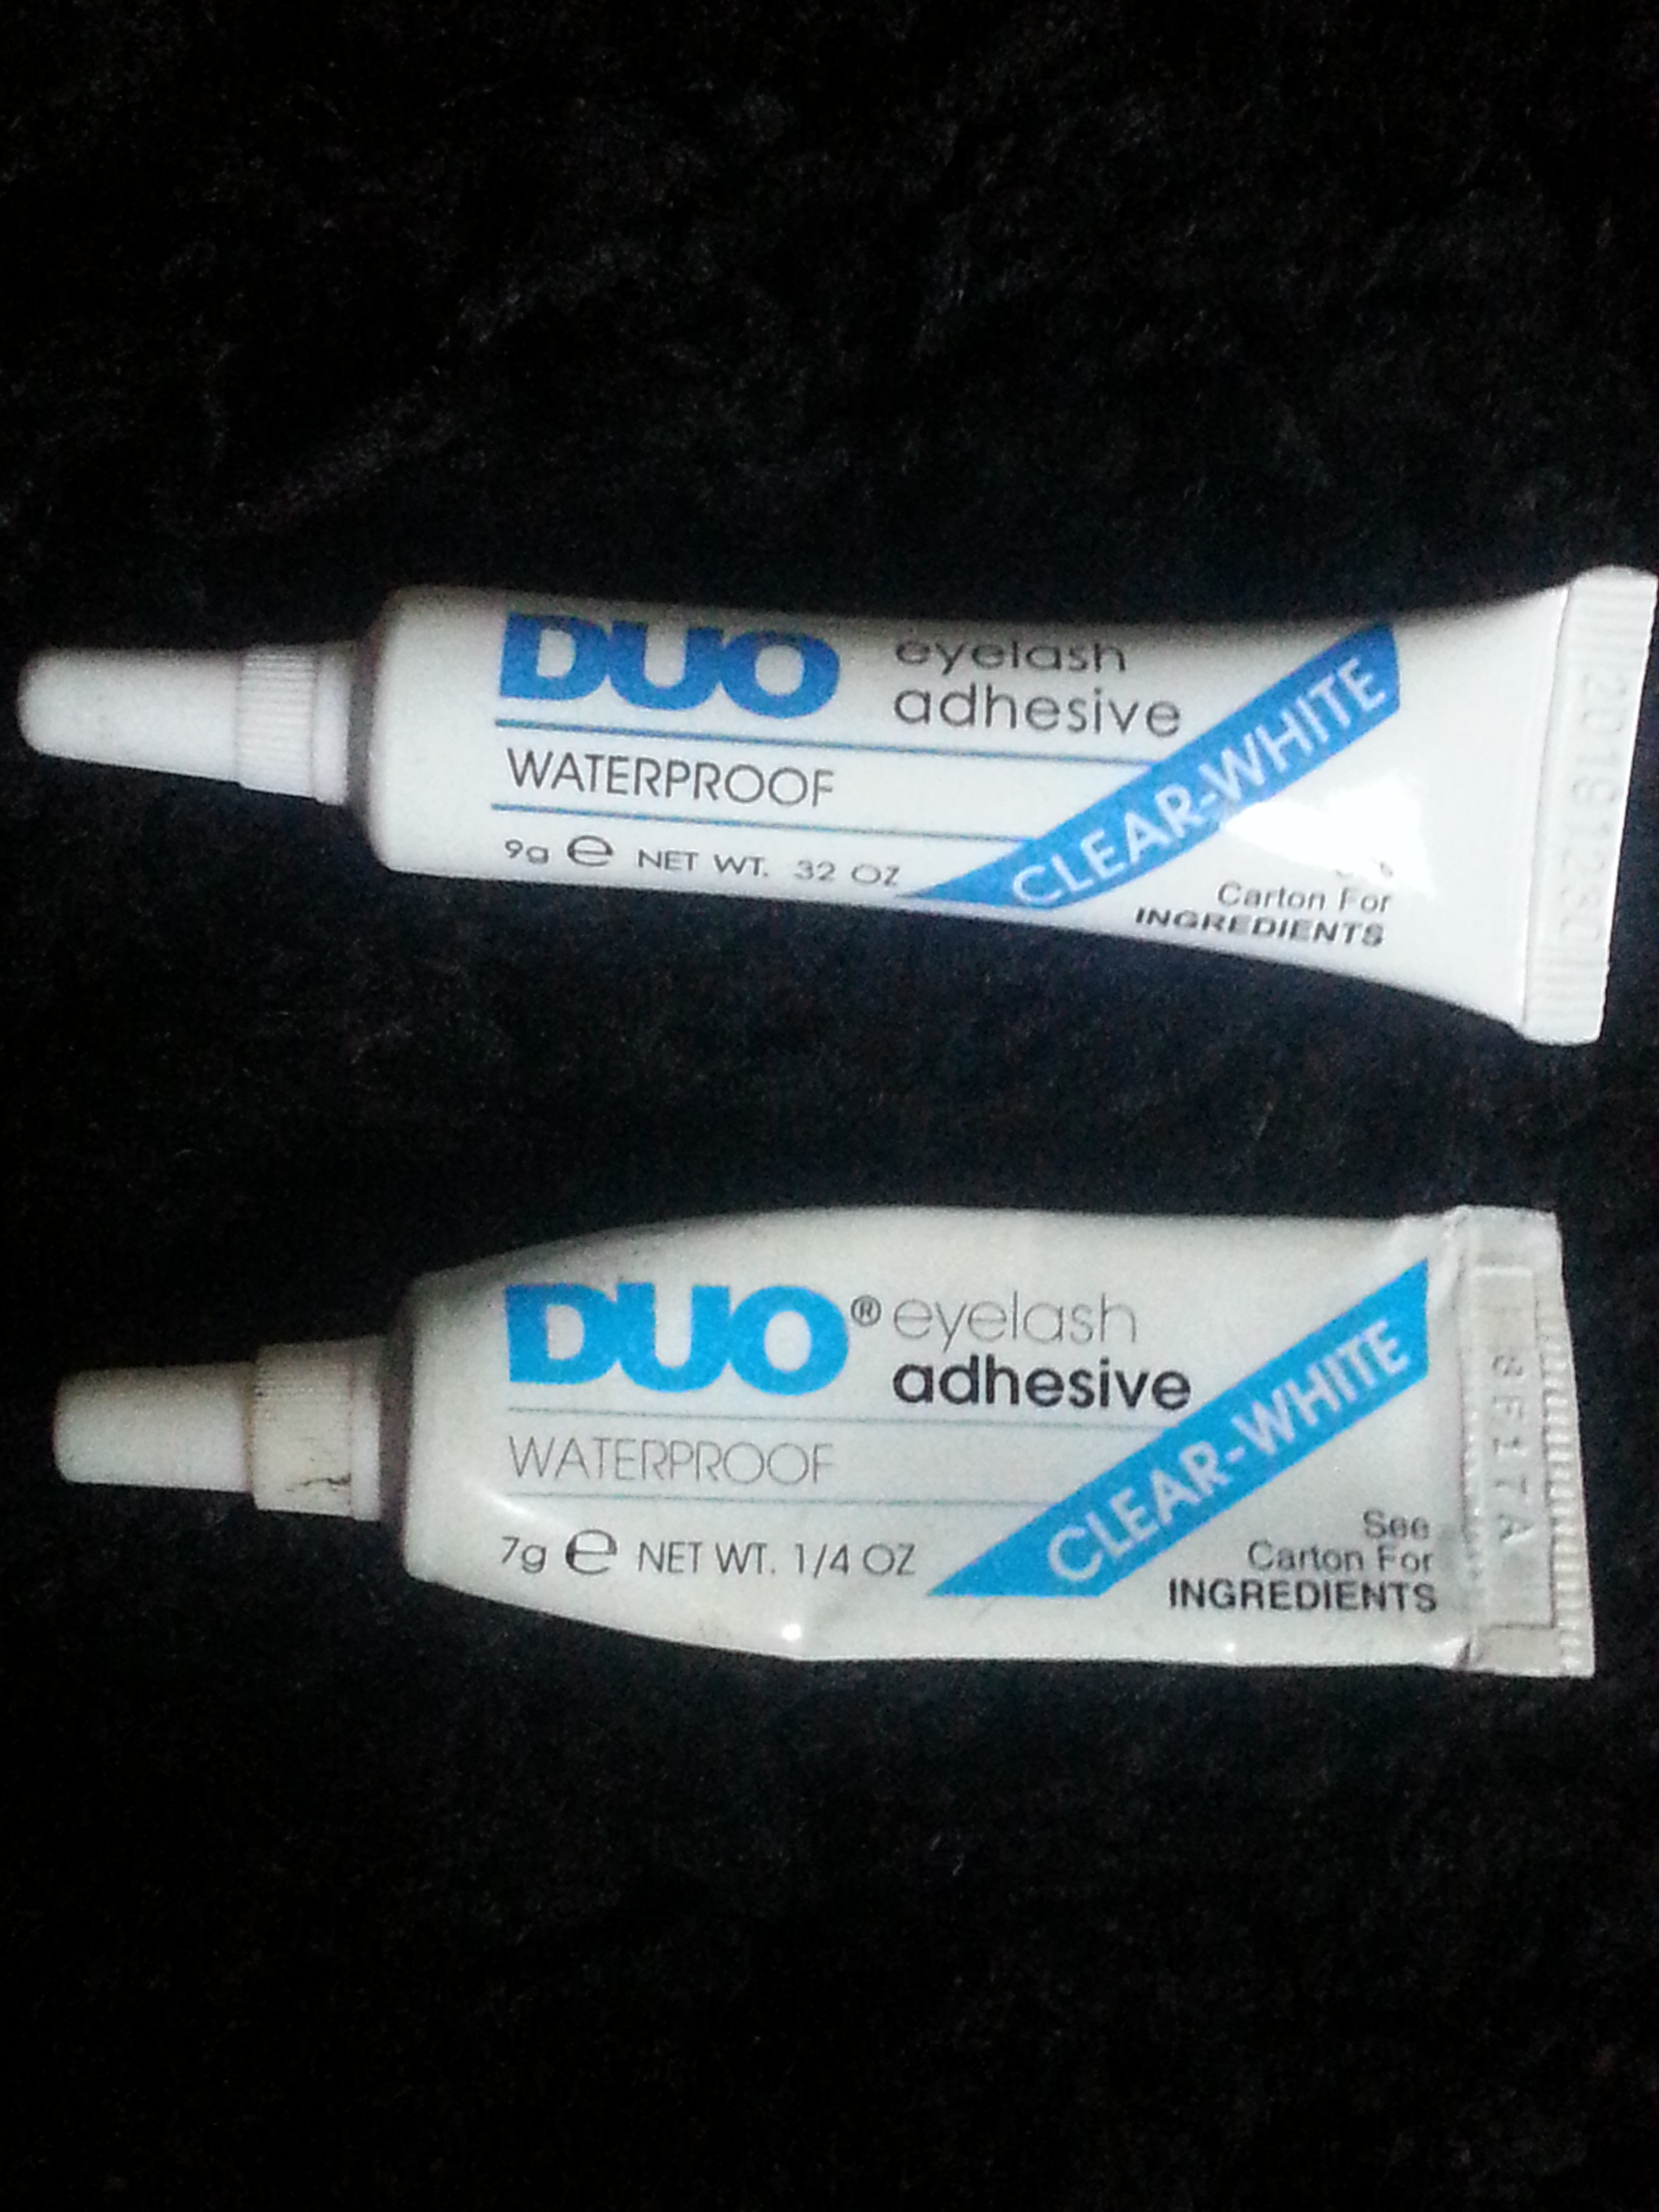 How to Open Duo Eyelash Glue 